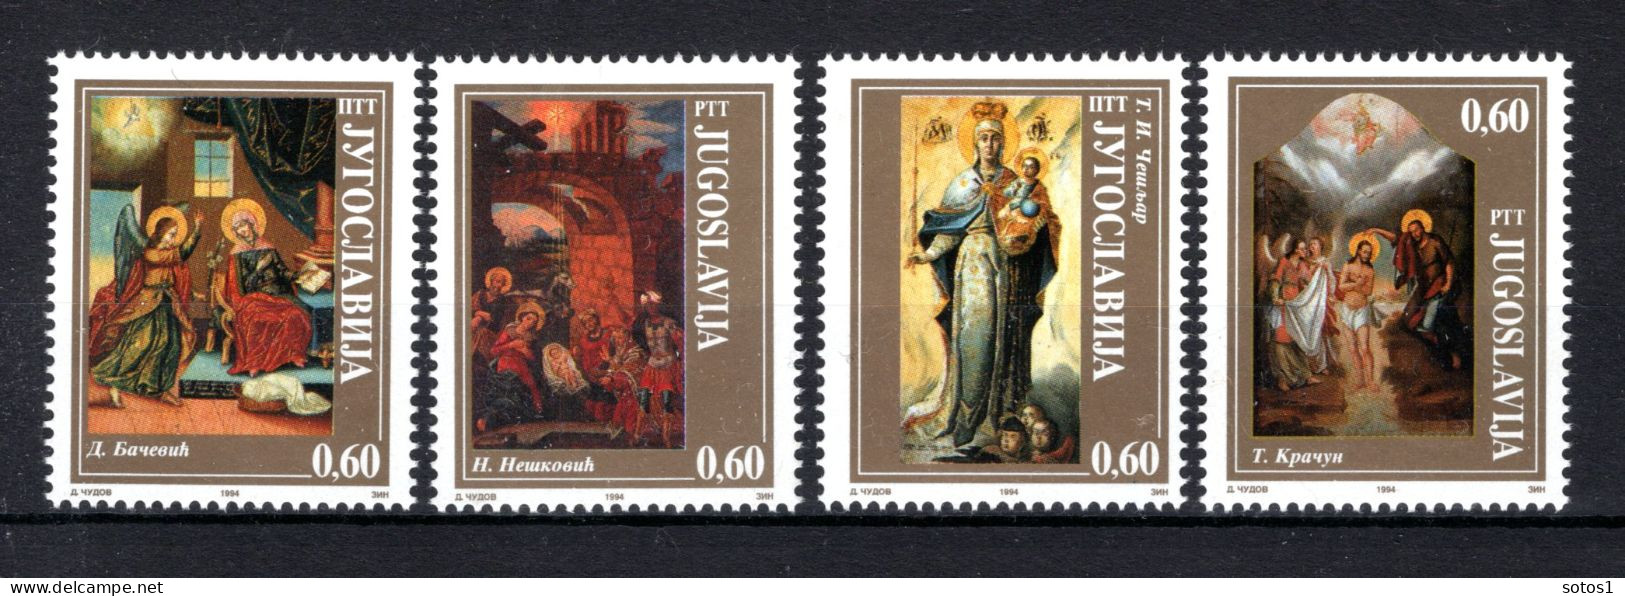 JOEGOSLAVIE Yt. 2552/2555 MNH 1994 - Unused Stamps